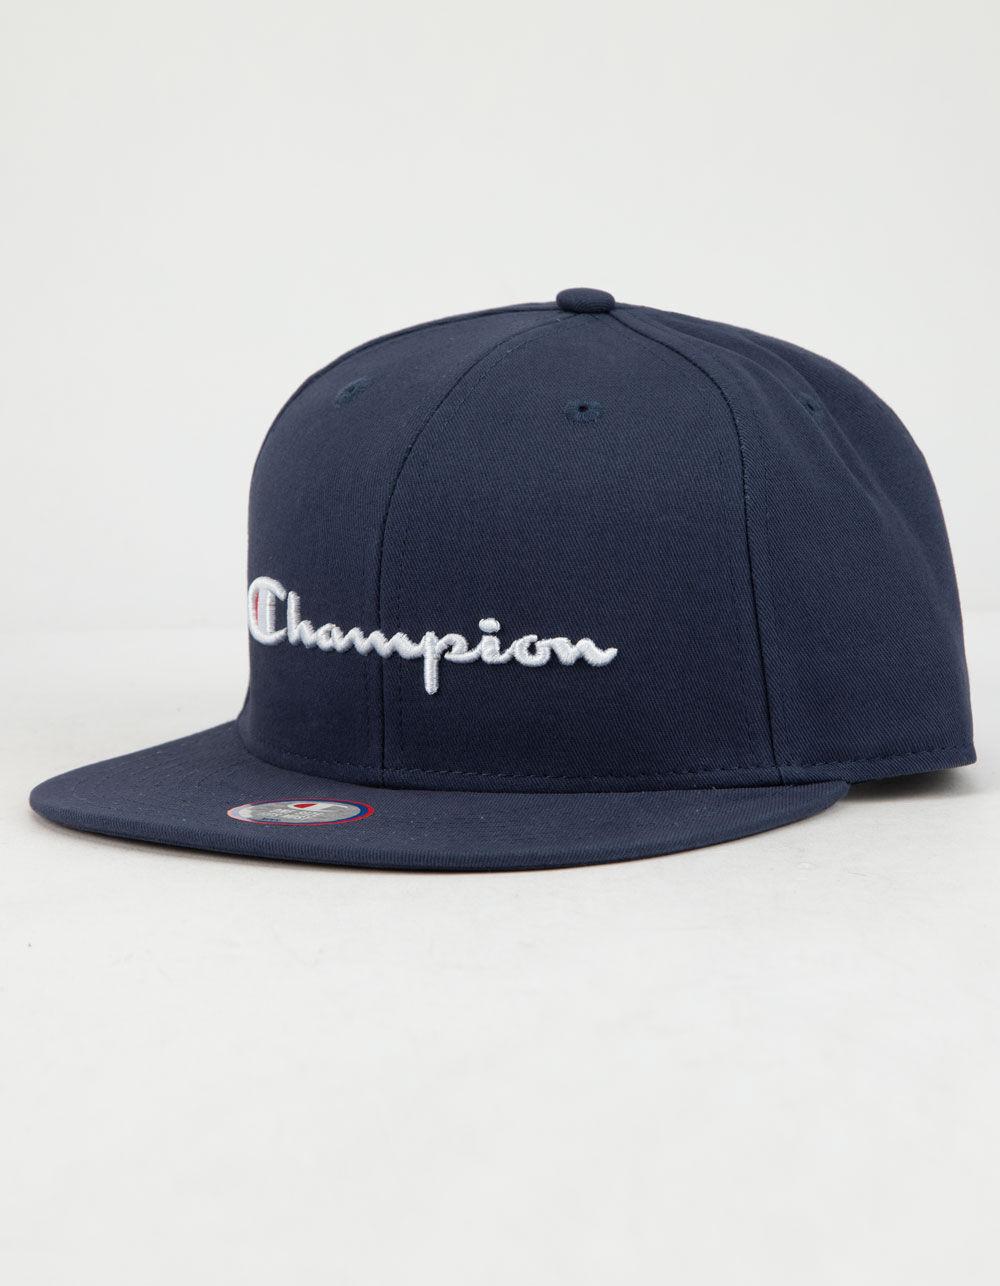 mens champion hat